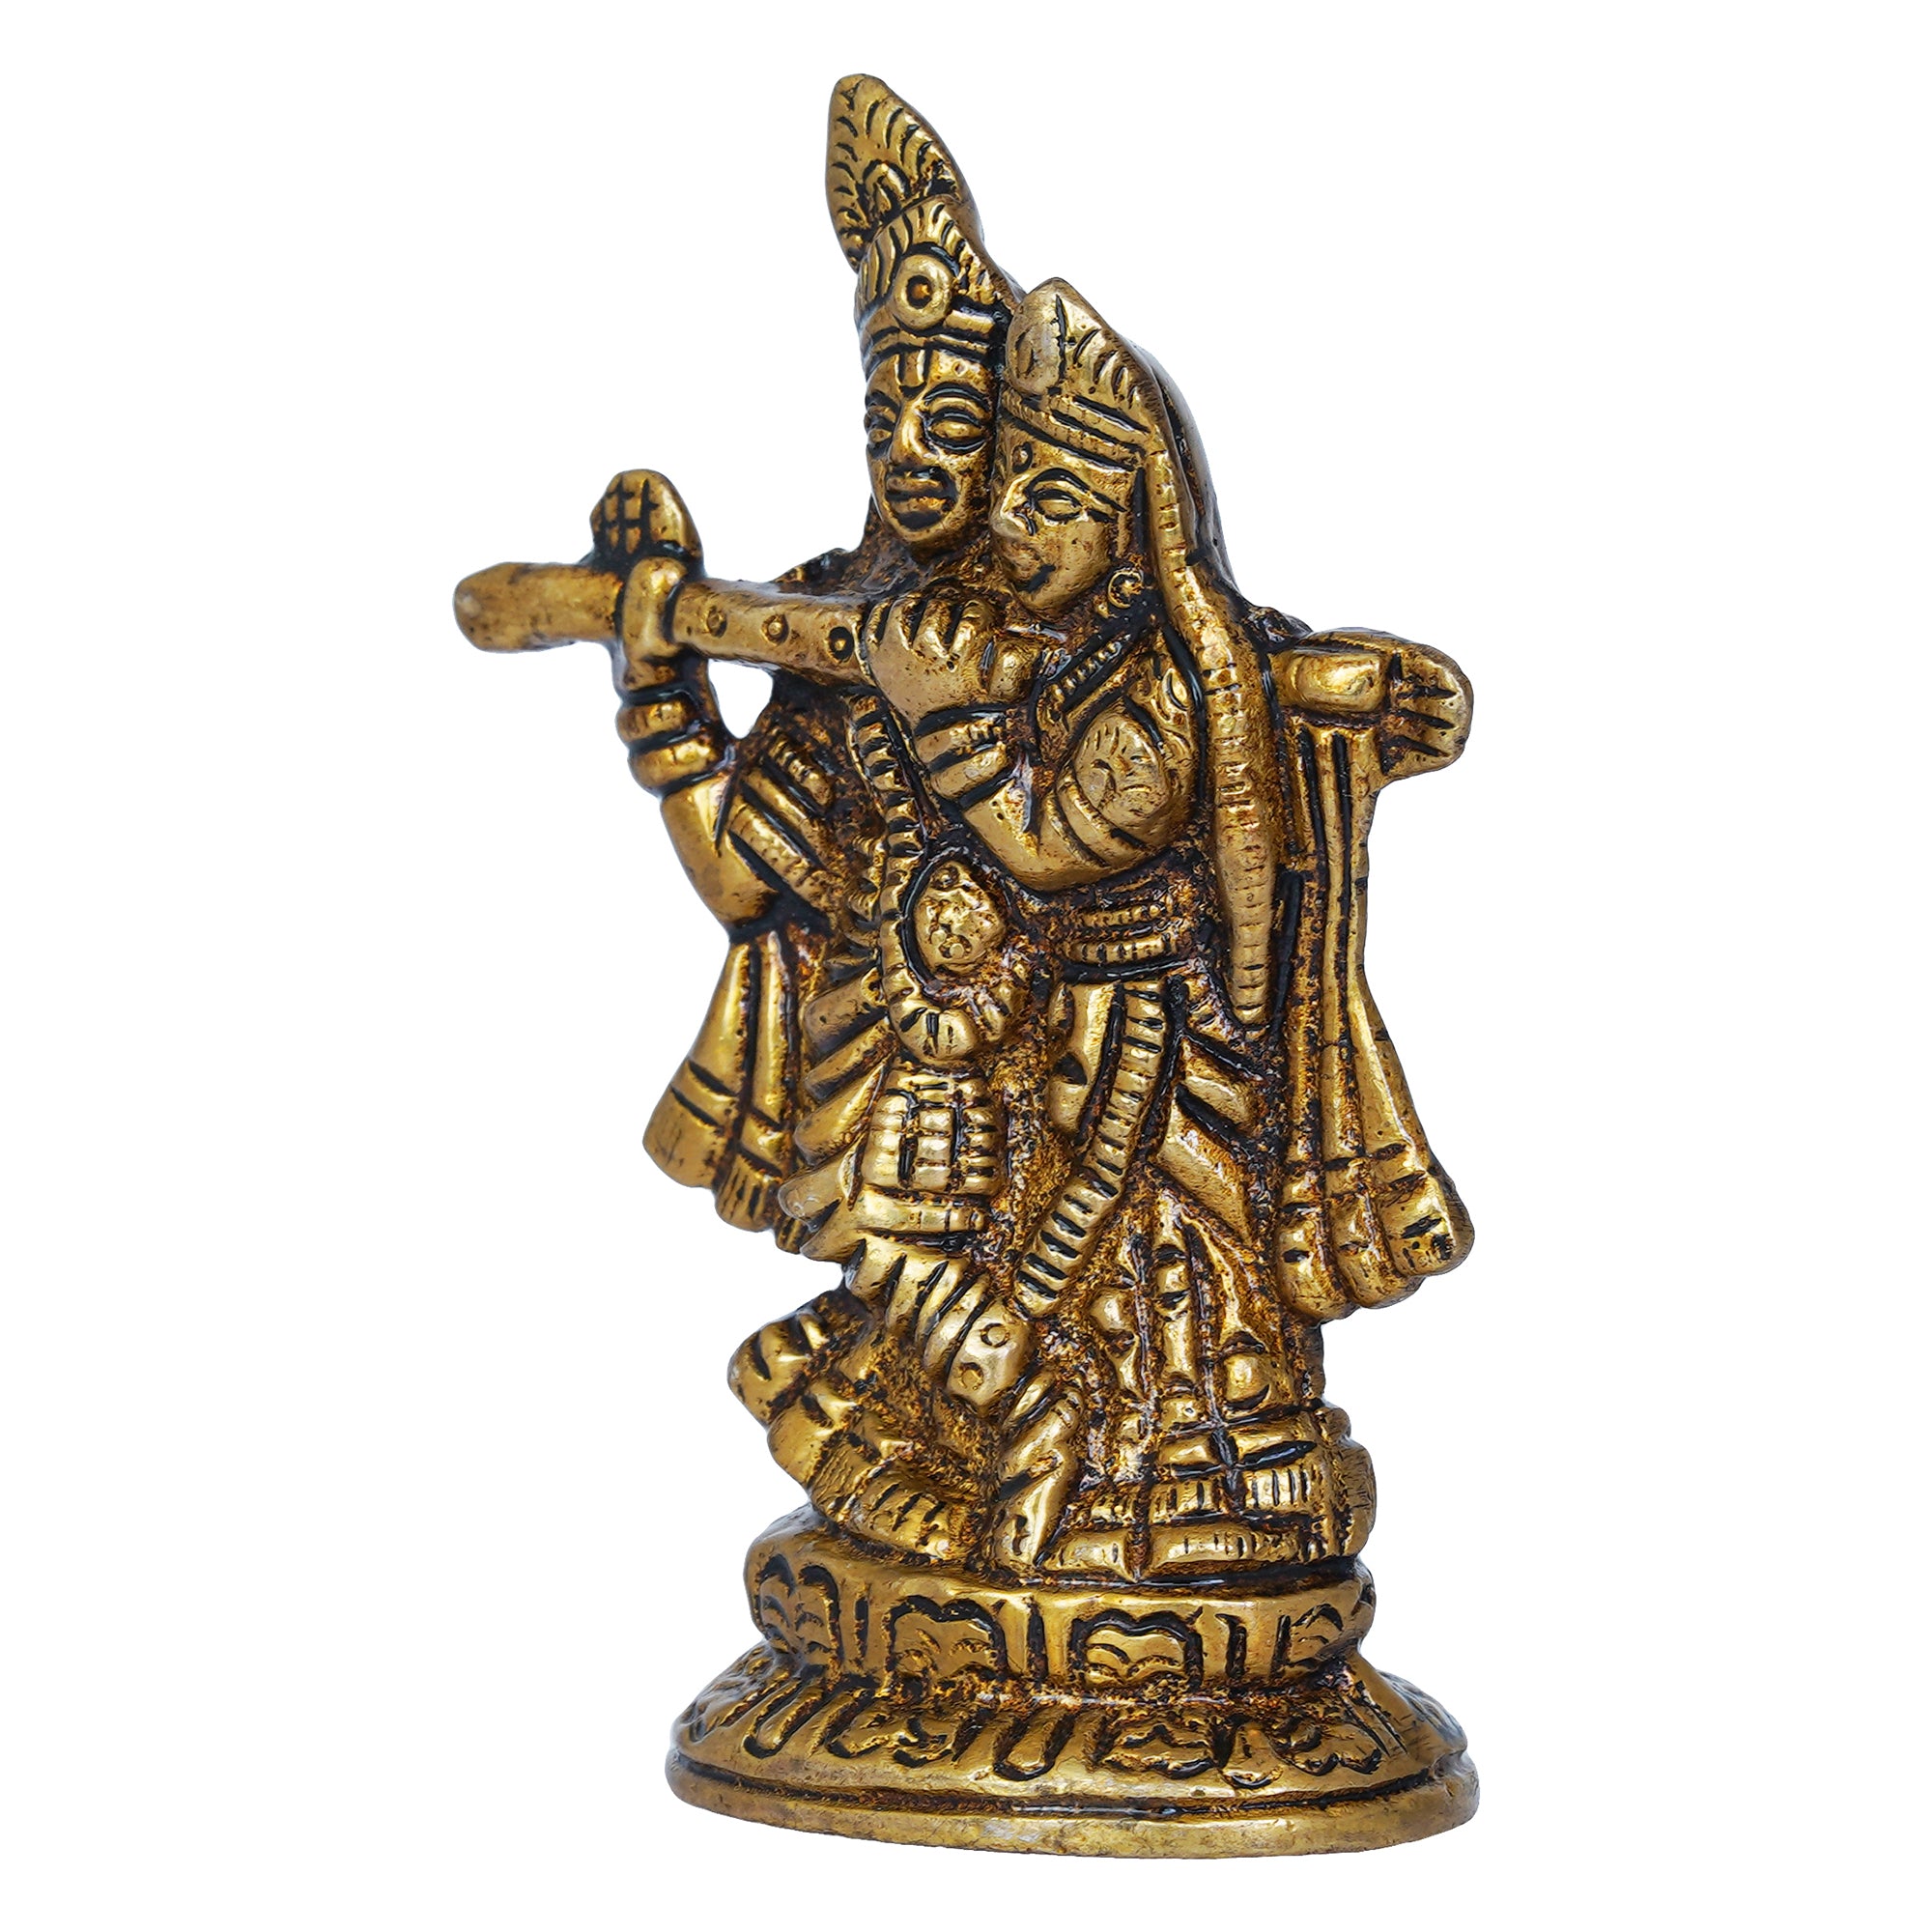 Golden Brass Radha Krishna Murti Idol - God Goddess Statue Decorative Showpiece for Home, Office, Car Dashboard - Gift for Festivals like Janmashtami, Radha Ashtami, and Diwali 6